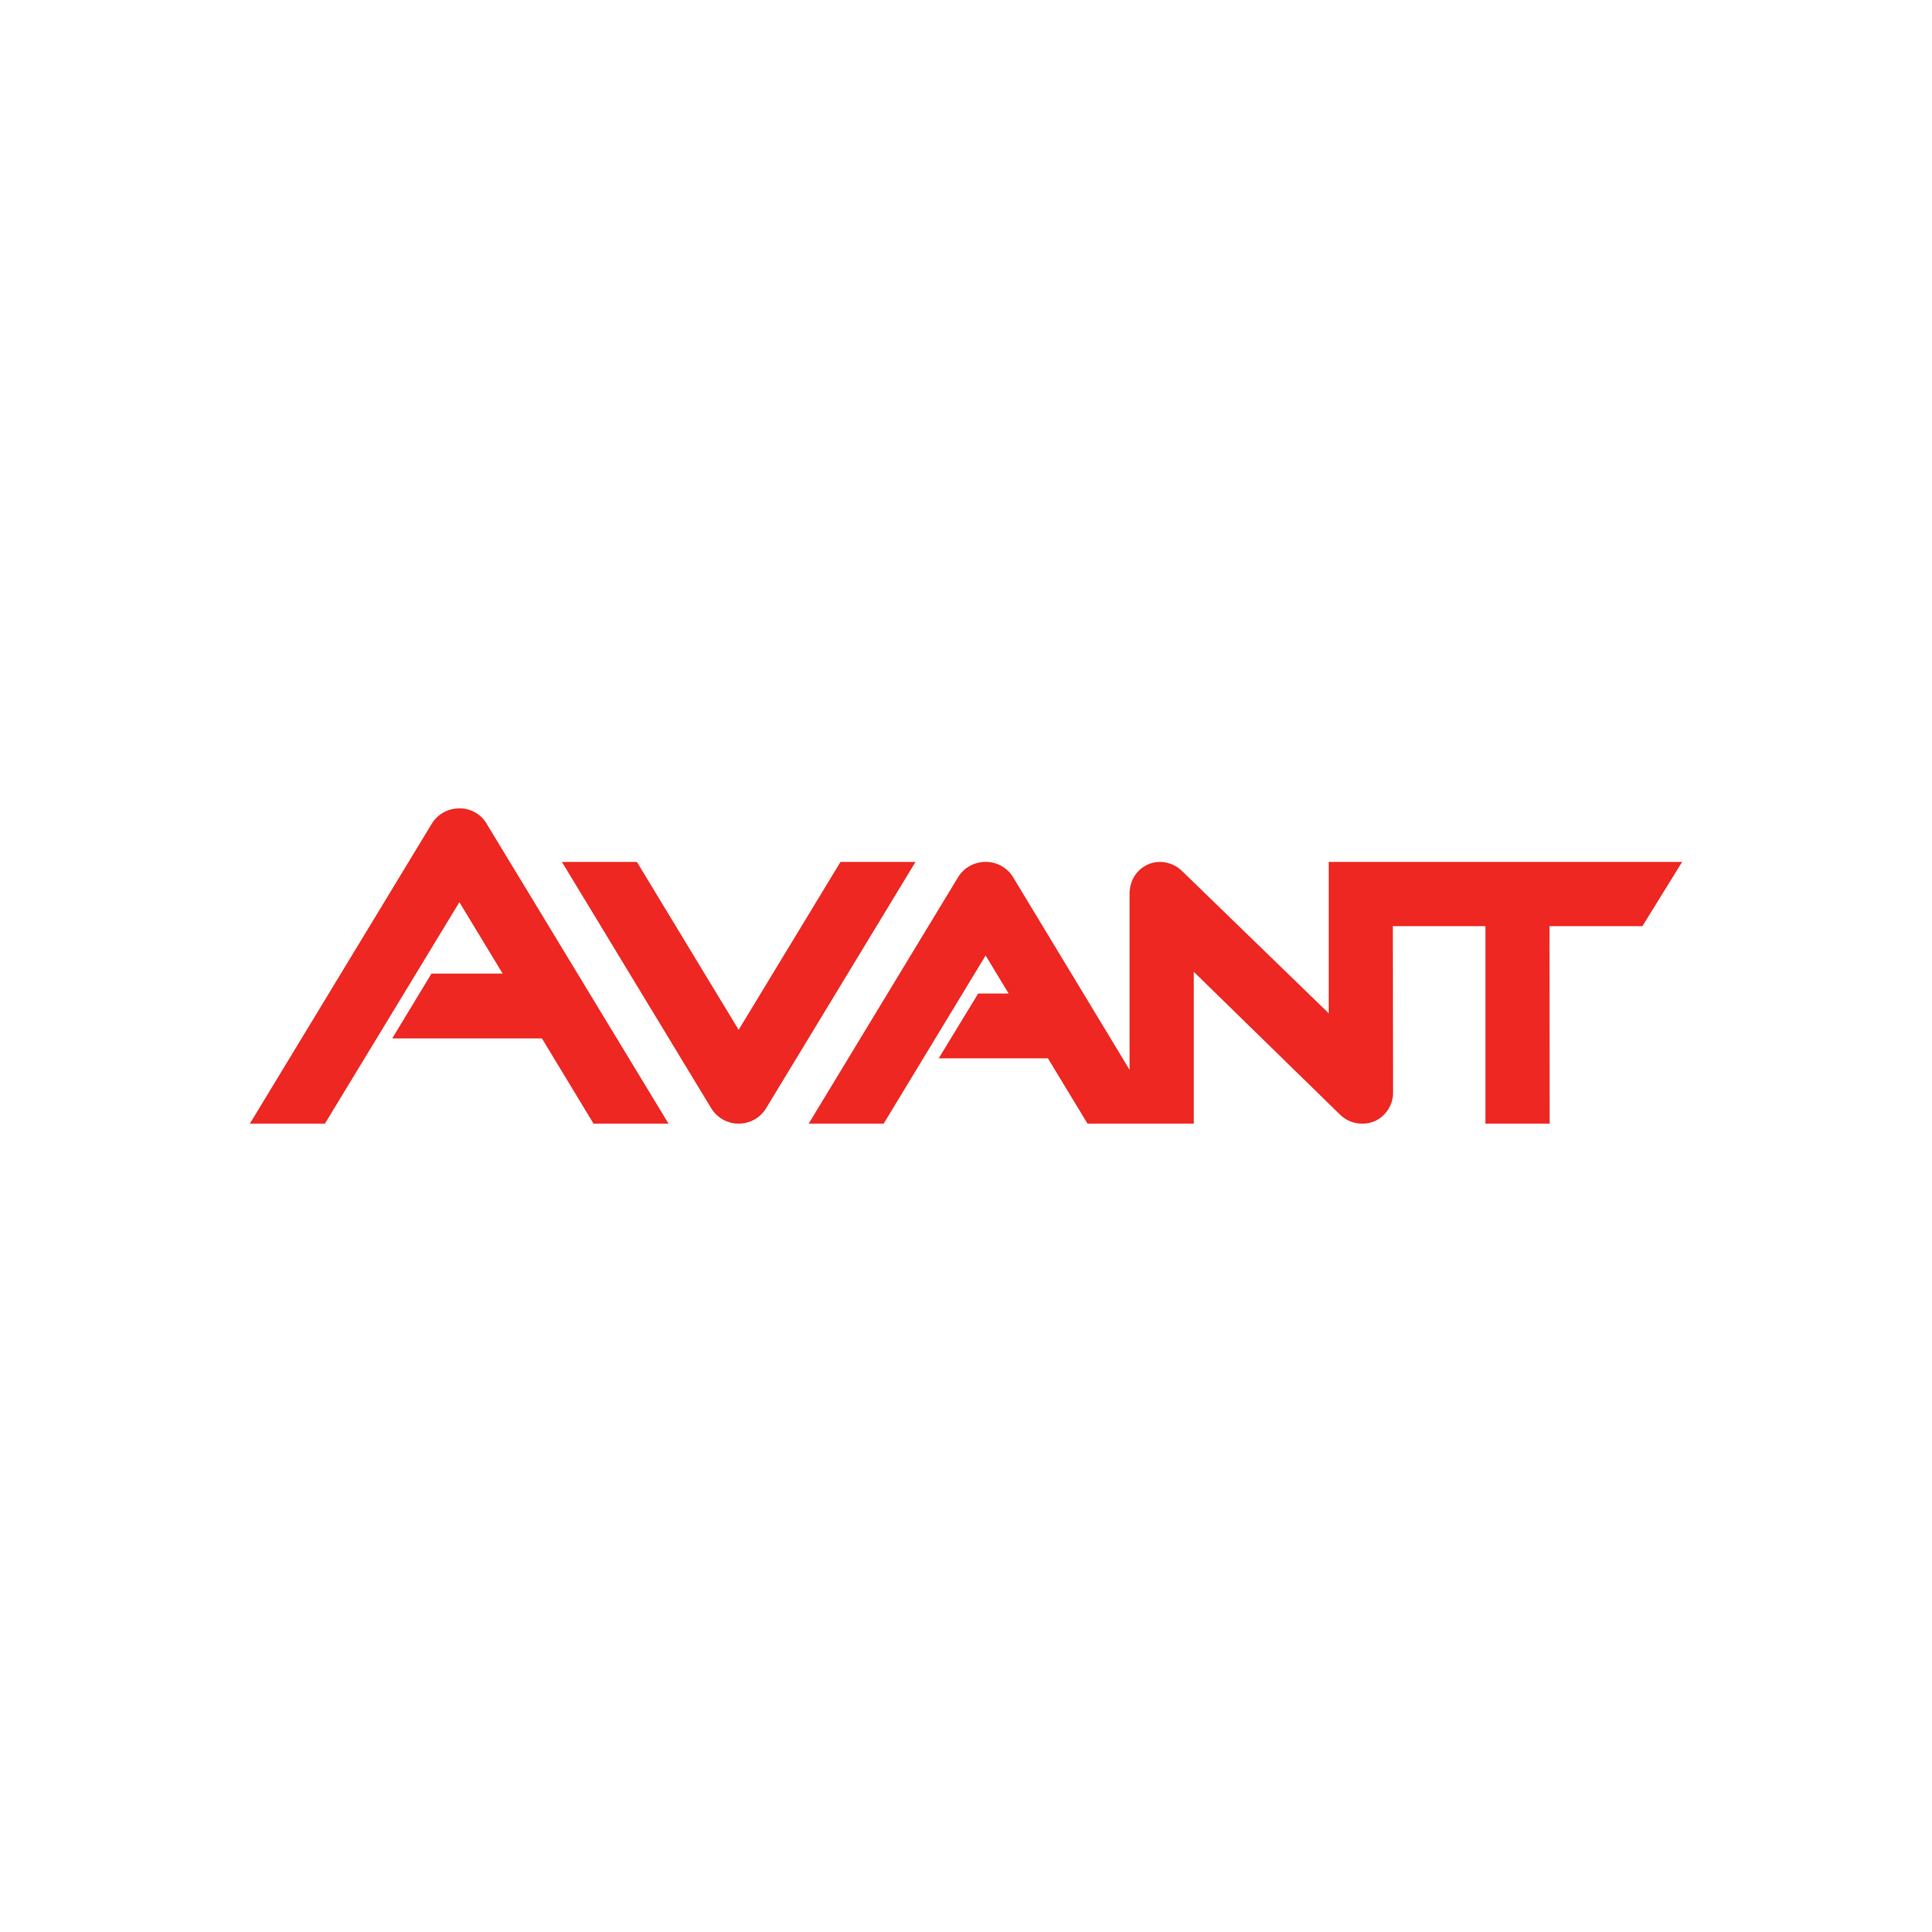 avant logo 0 - Avant Logo